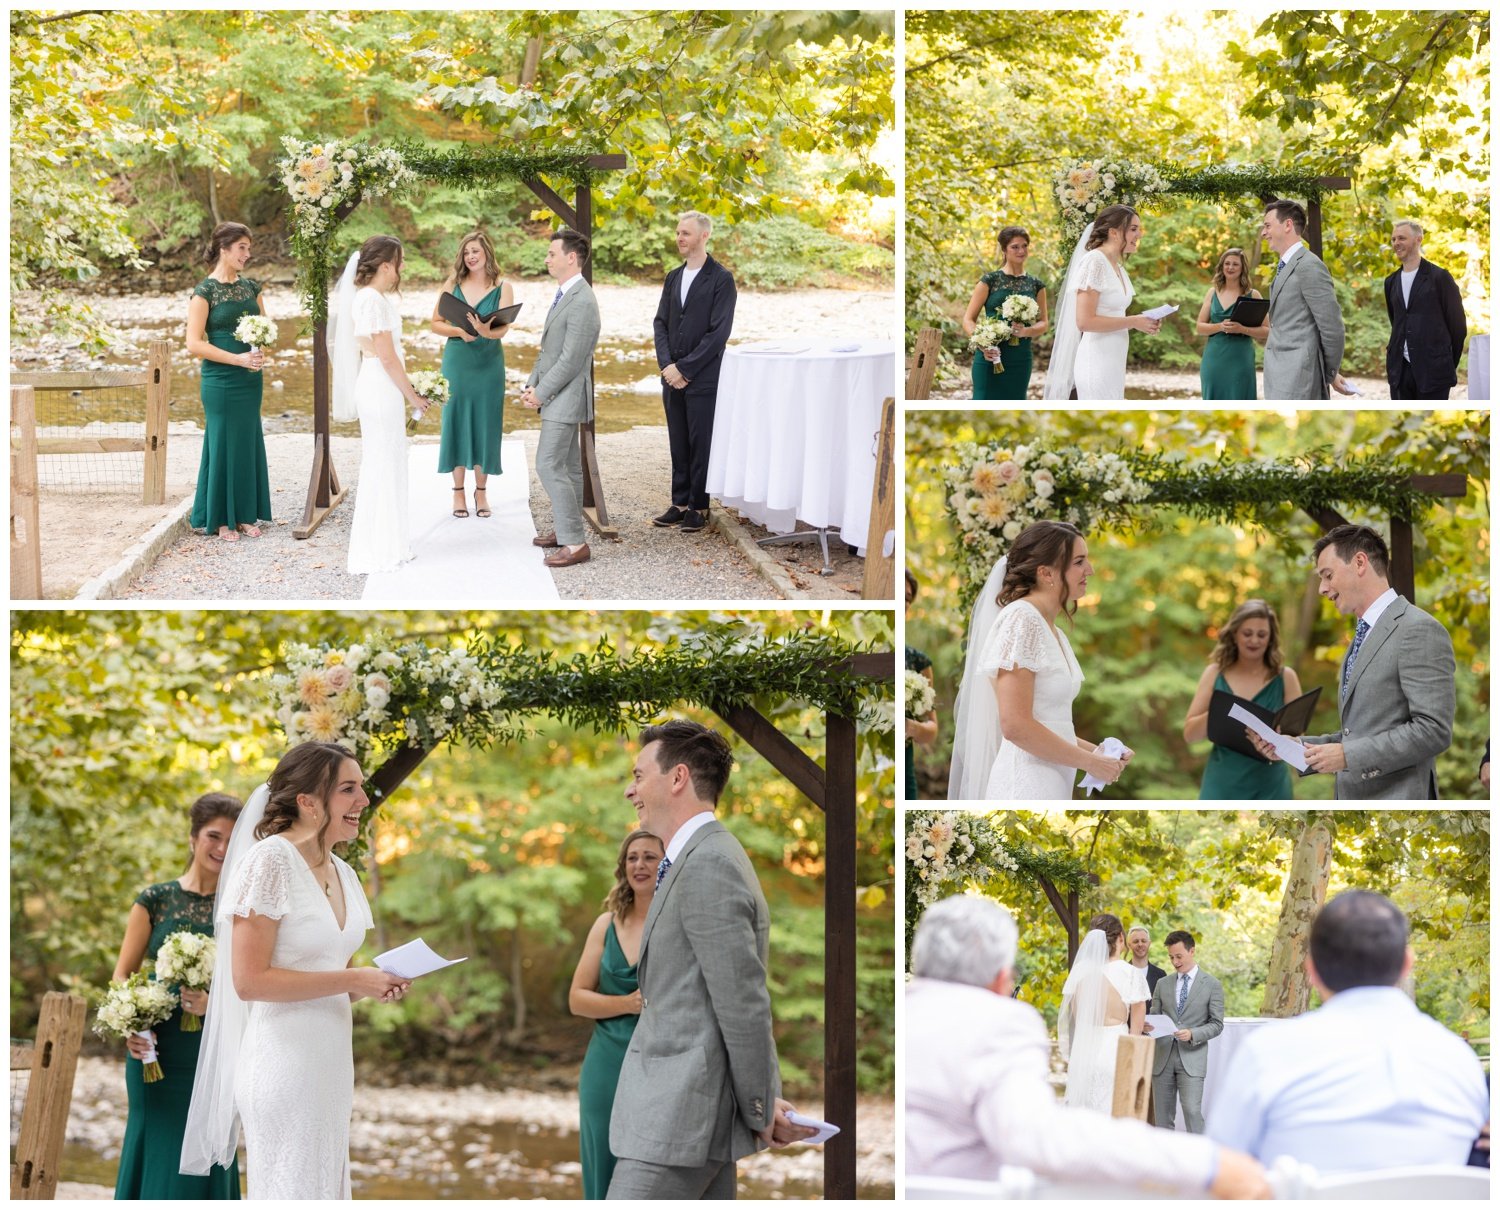 Valley-Green-Inn-Wissahickon-Park-Summer-Elopement-Intimate-Wedding-6